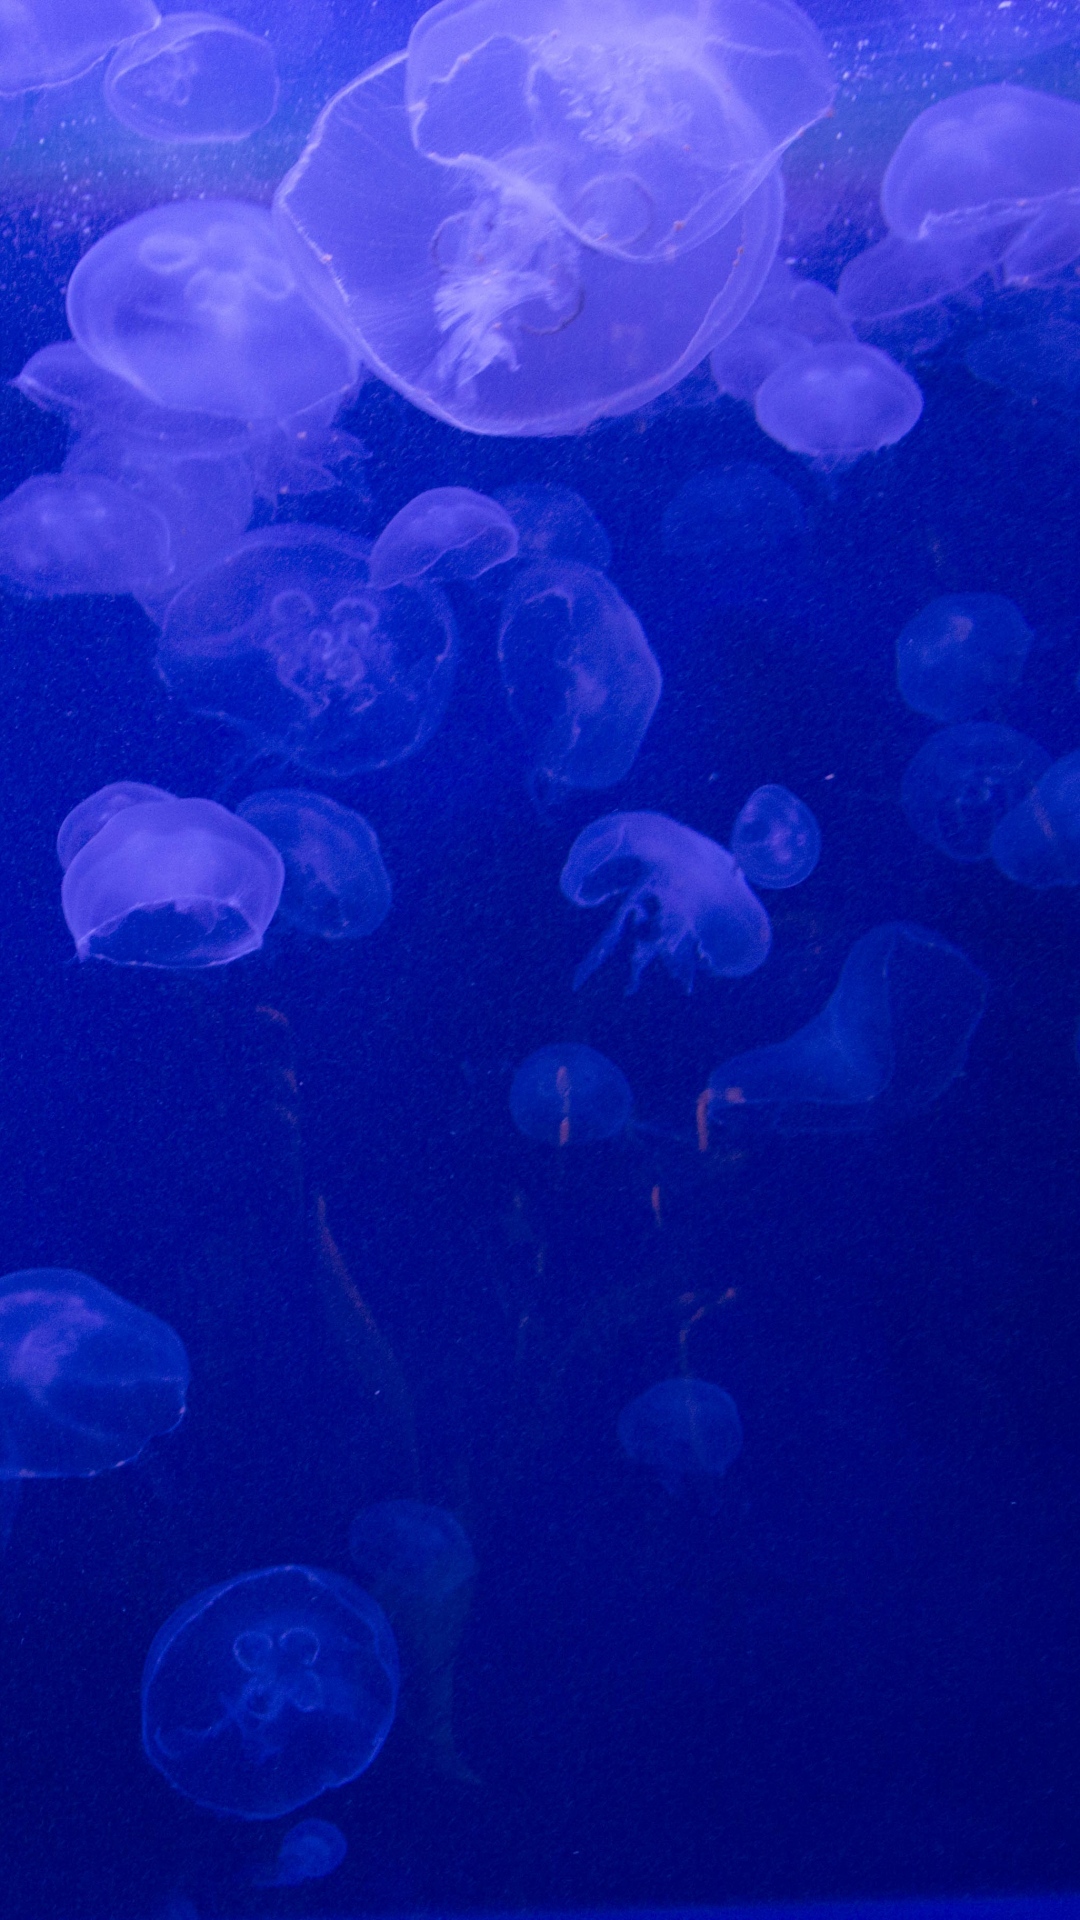 jellyfish wallpaper iphone,jellyfish,blue,cobalt blue,electric blue,cnidaria